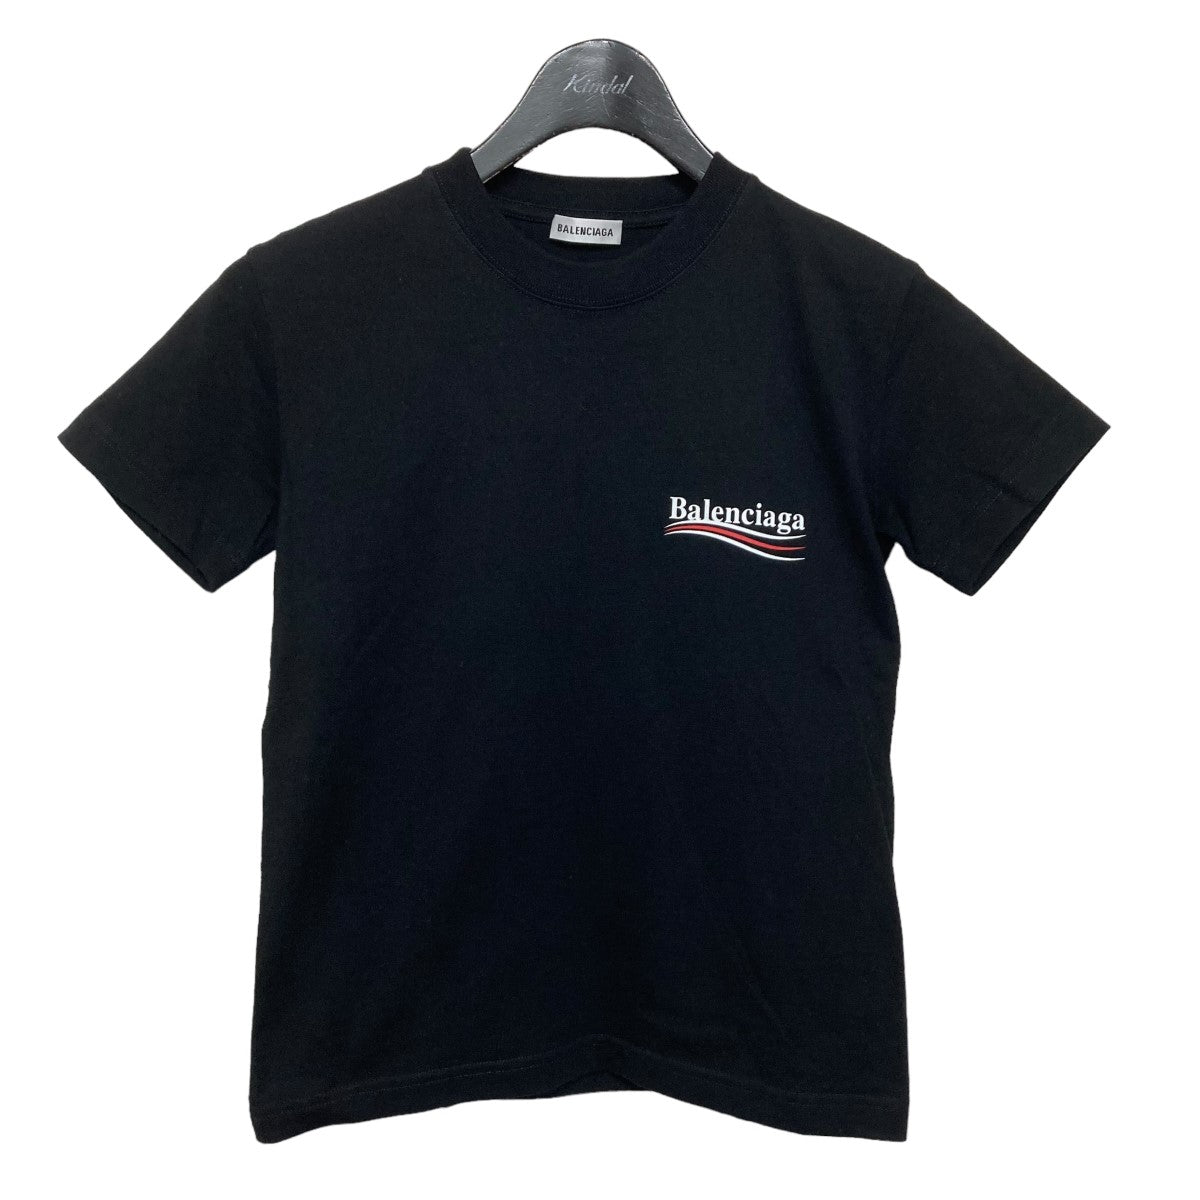 BALENCIAGA(バレンシアガ) ロゴTシャツ 612964 ブラック サイズ 14 ...